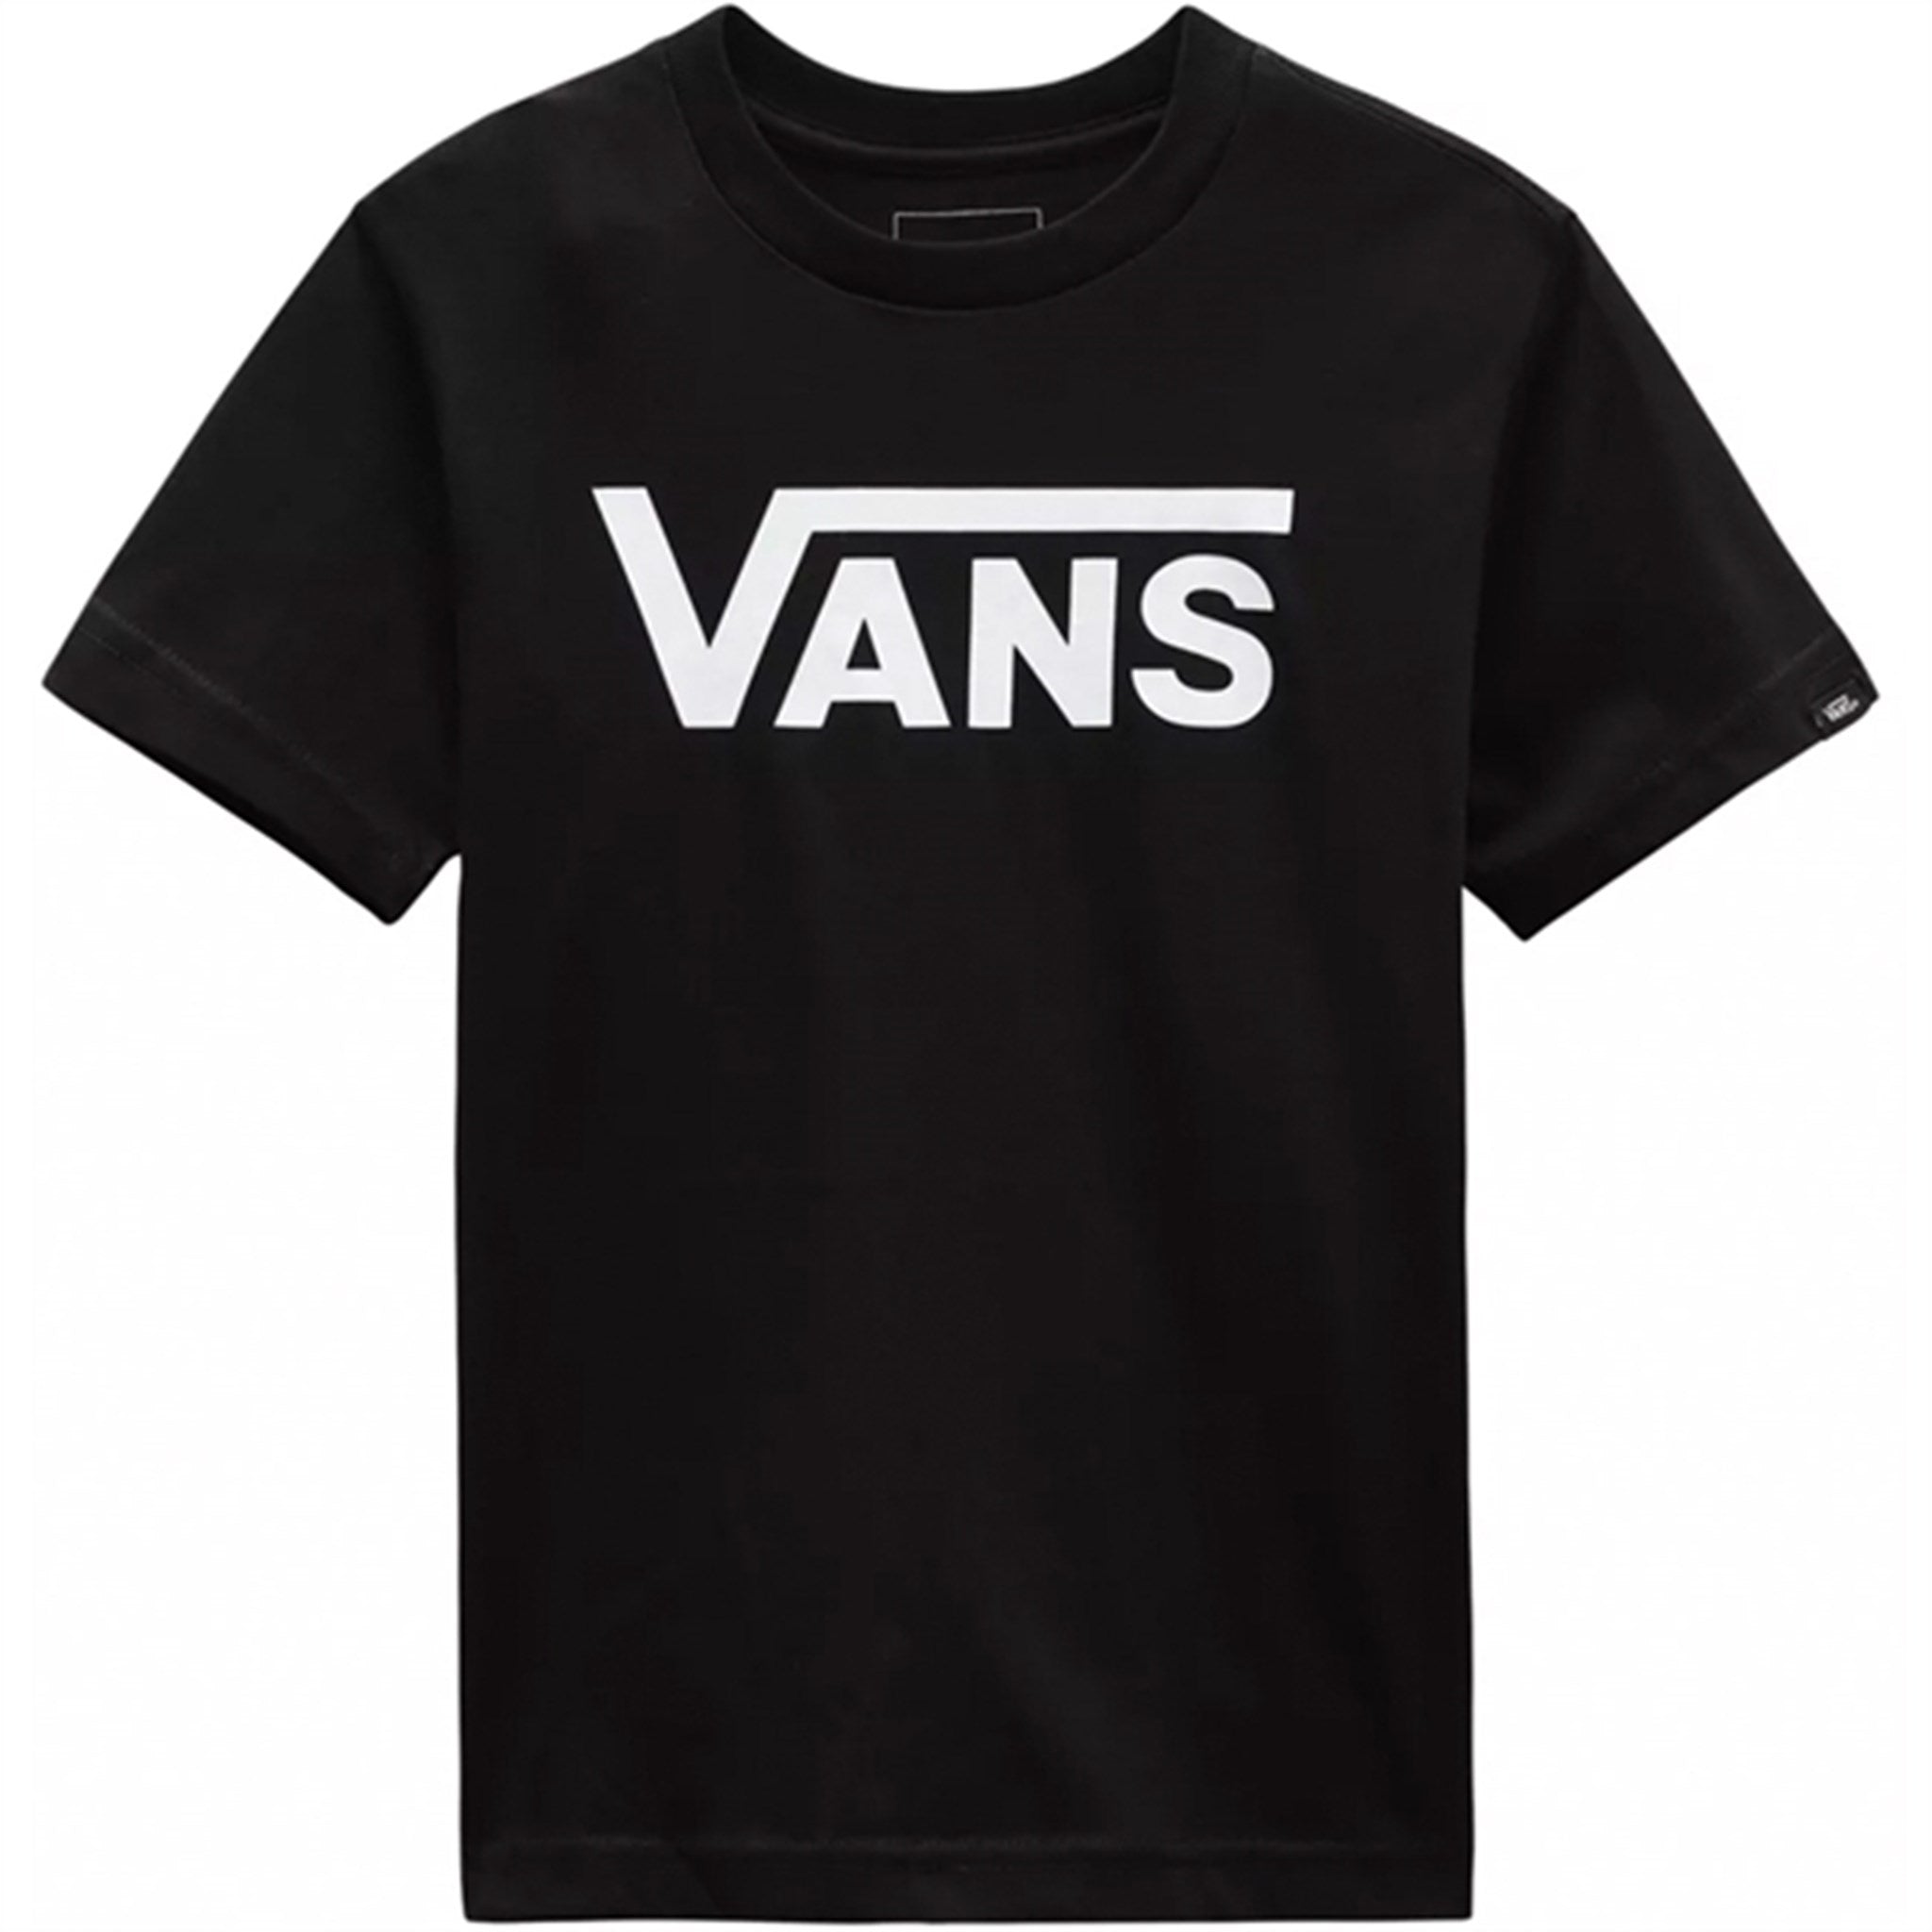 VANS Classic Kids T-shirt Black